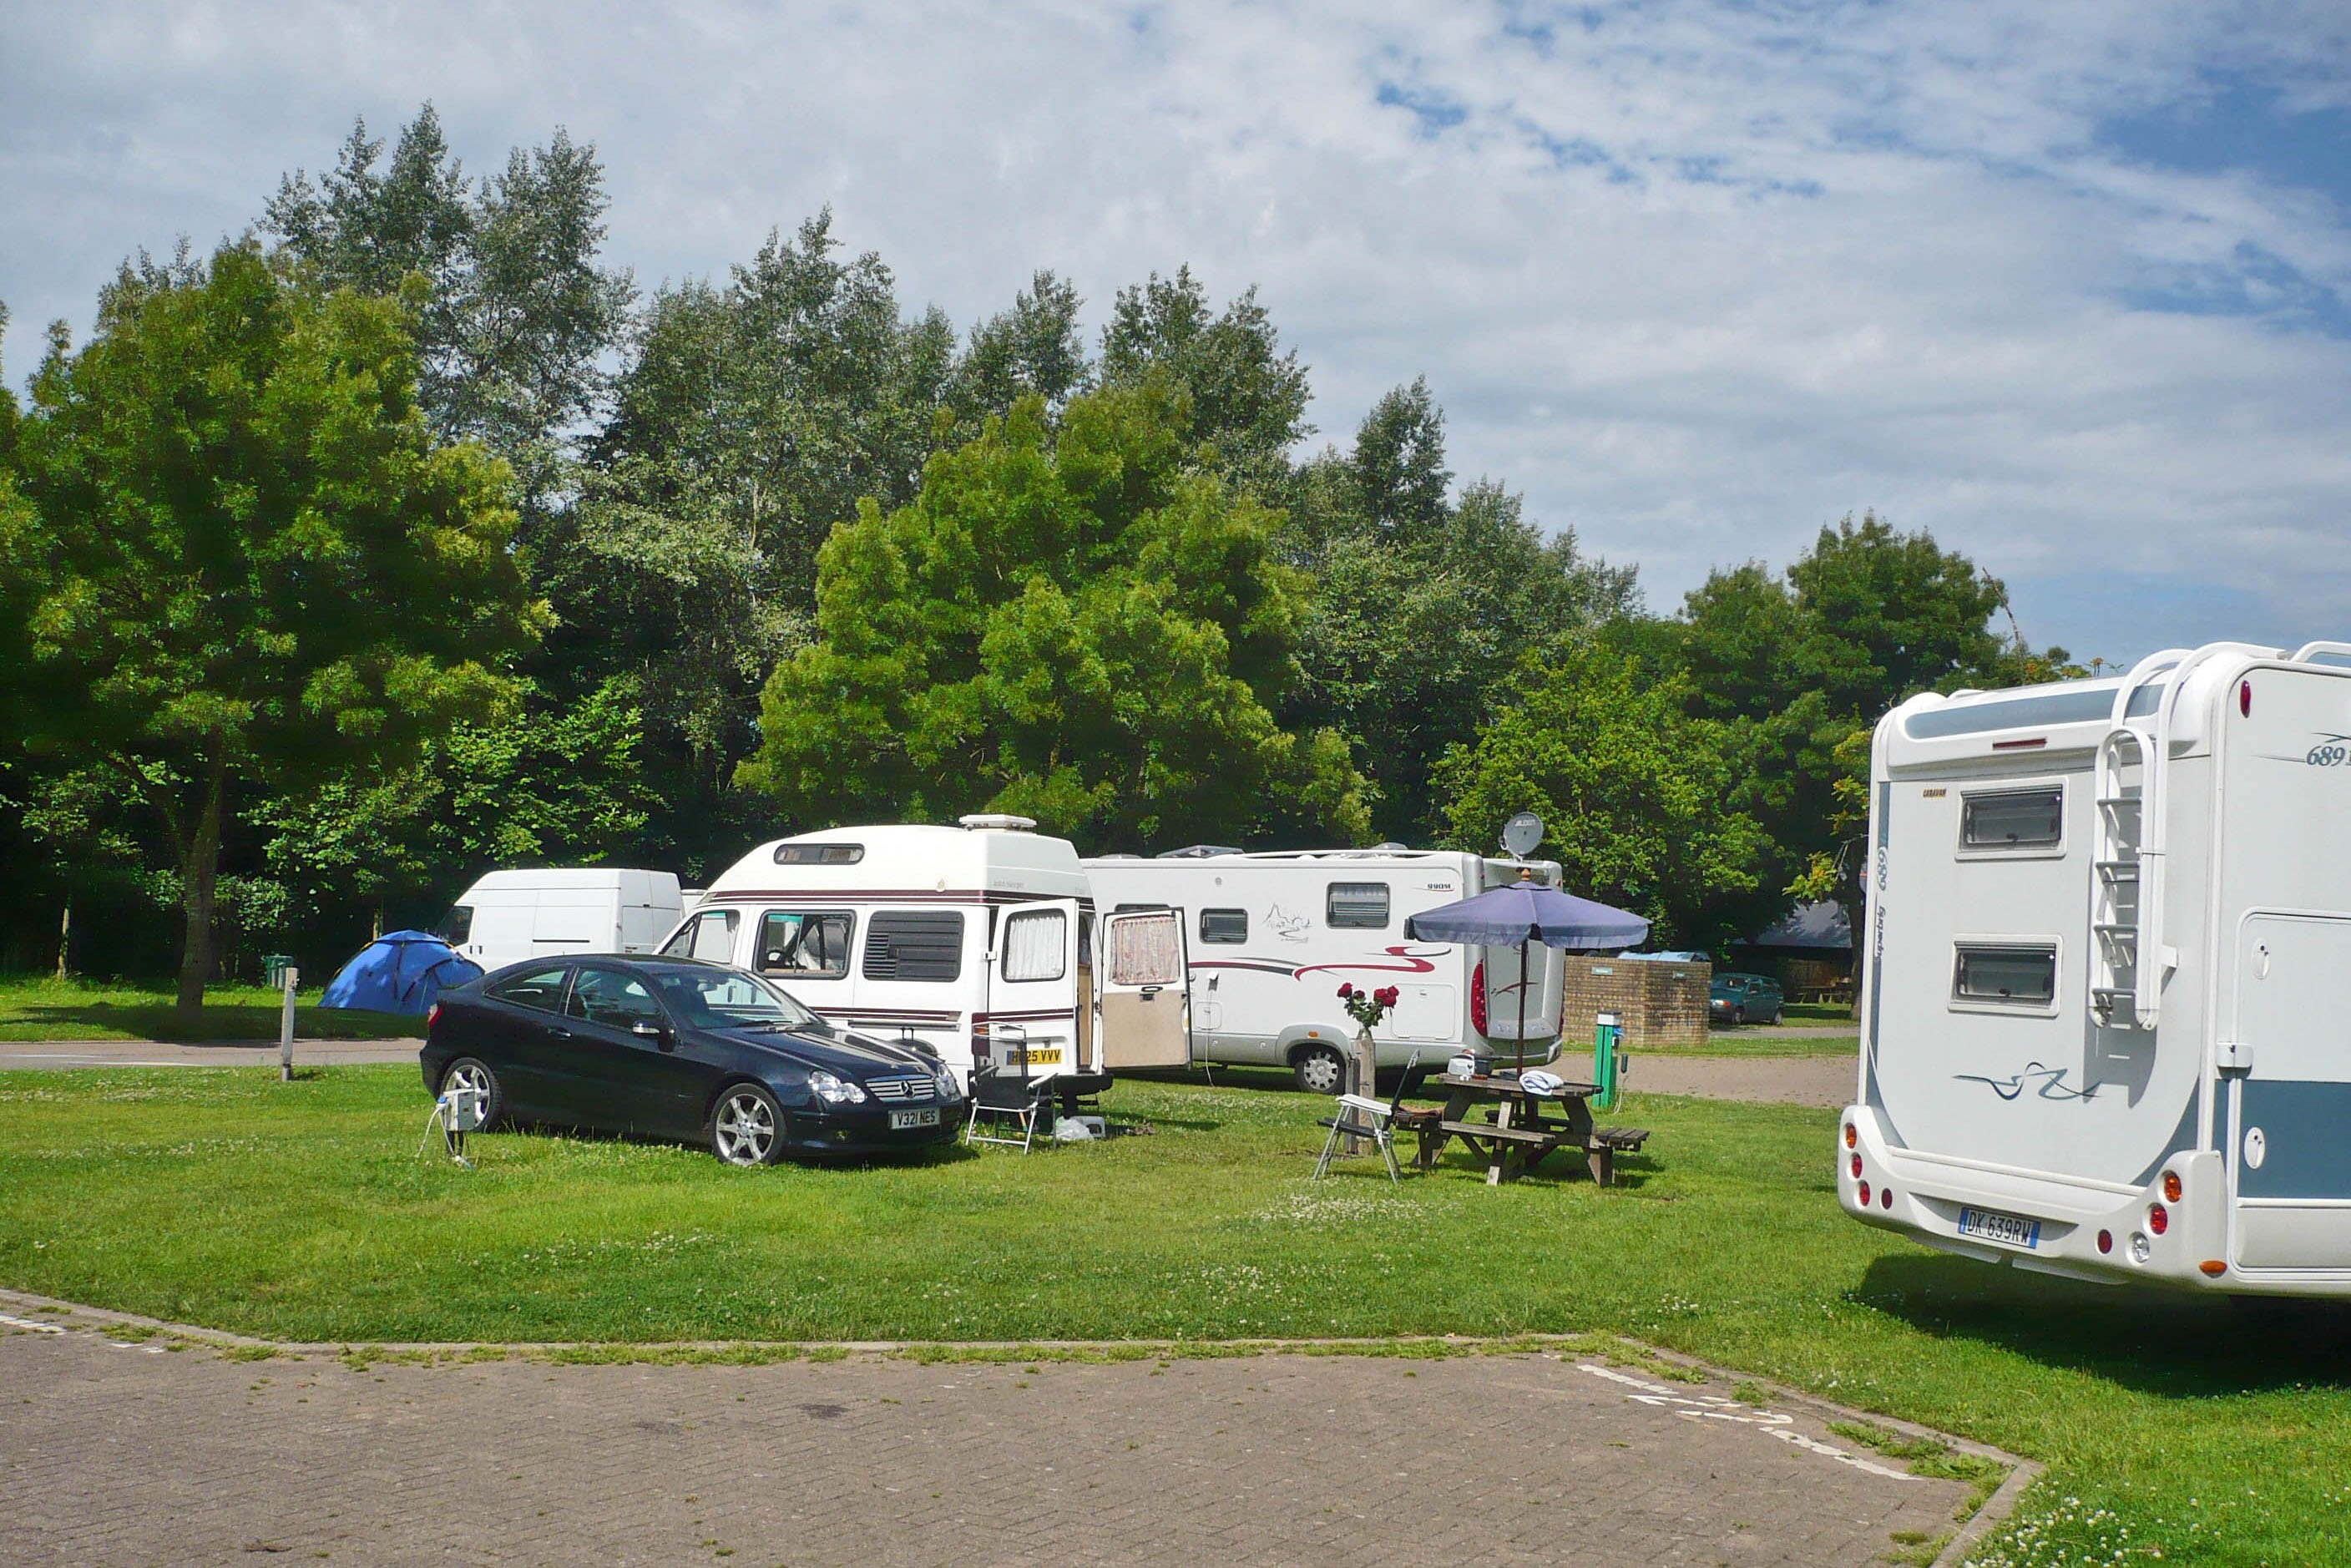 Cardiff Caravan & Camping Park